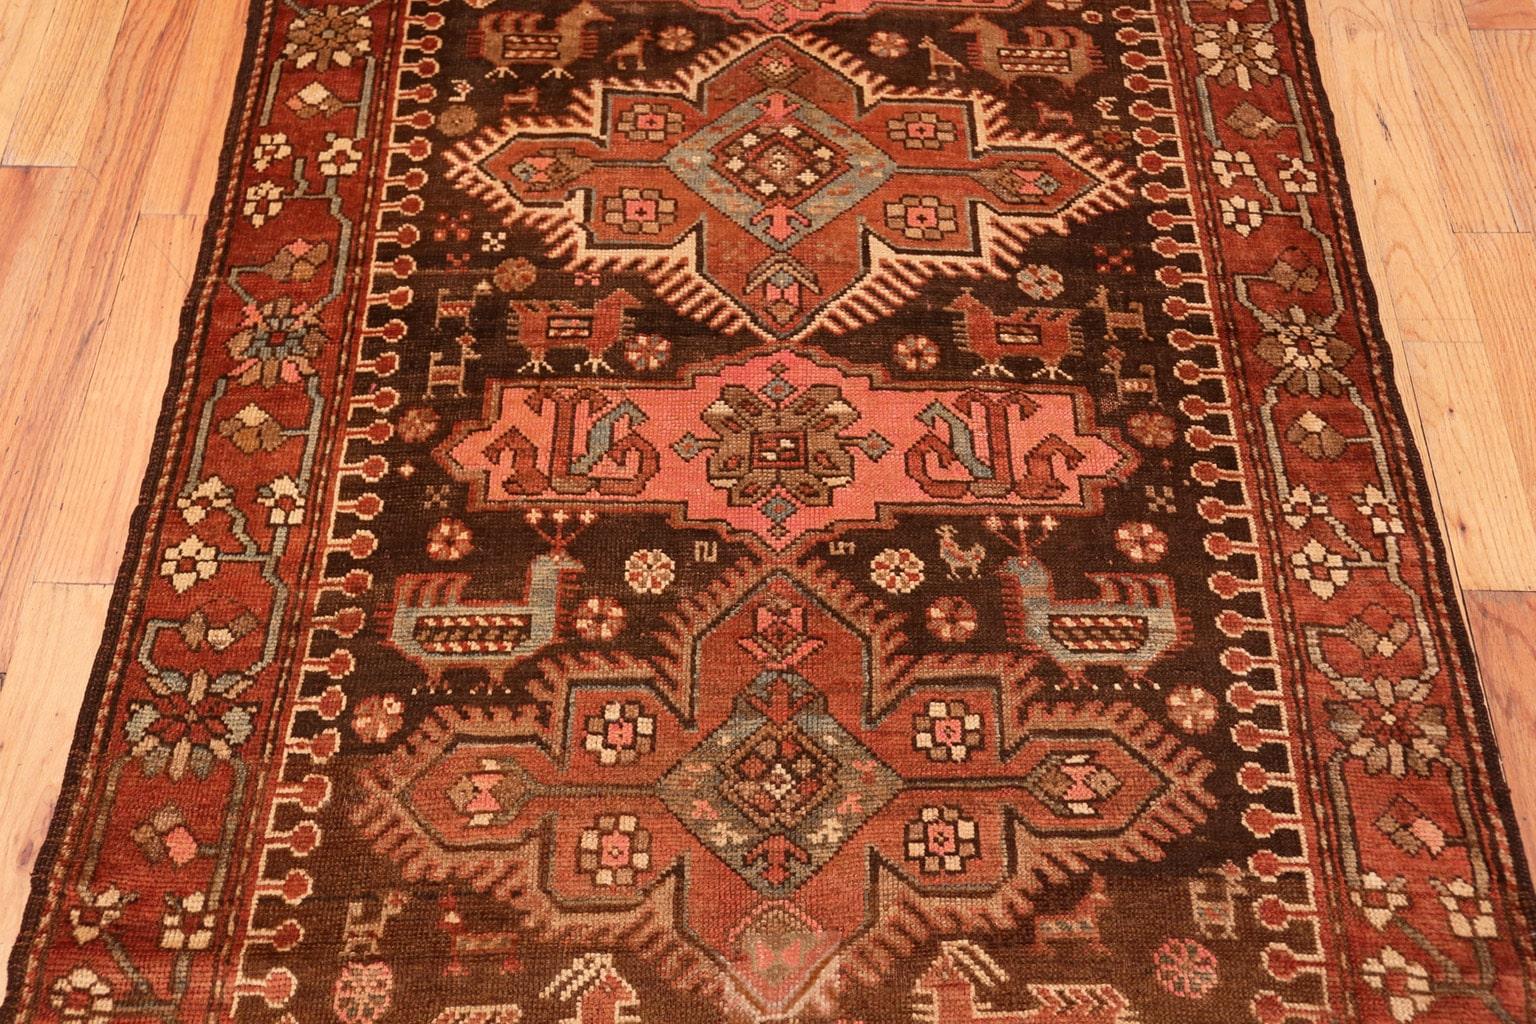 20th Century Small Antique Tribal Caucasian Kazak Rug. Size: 4 ft x 8 ft